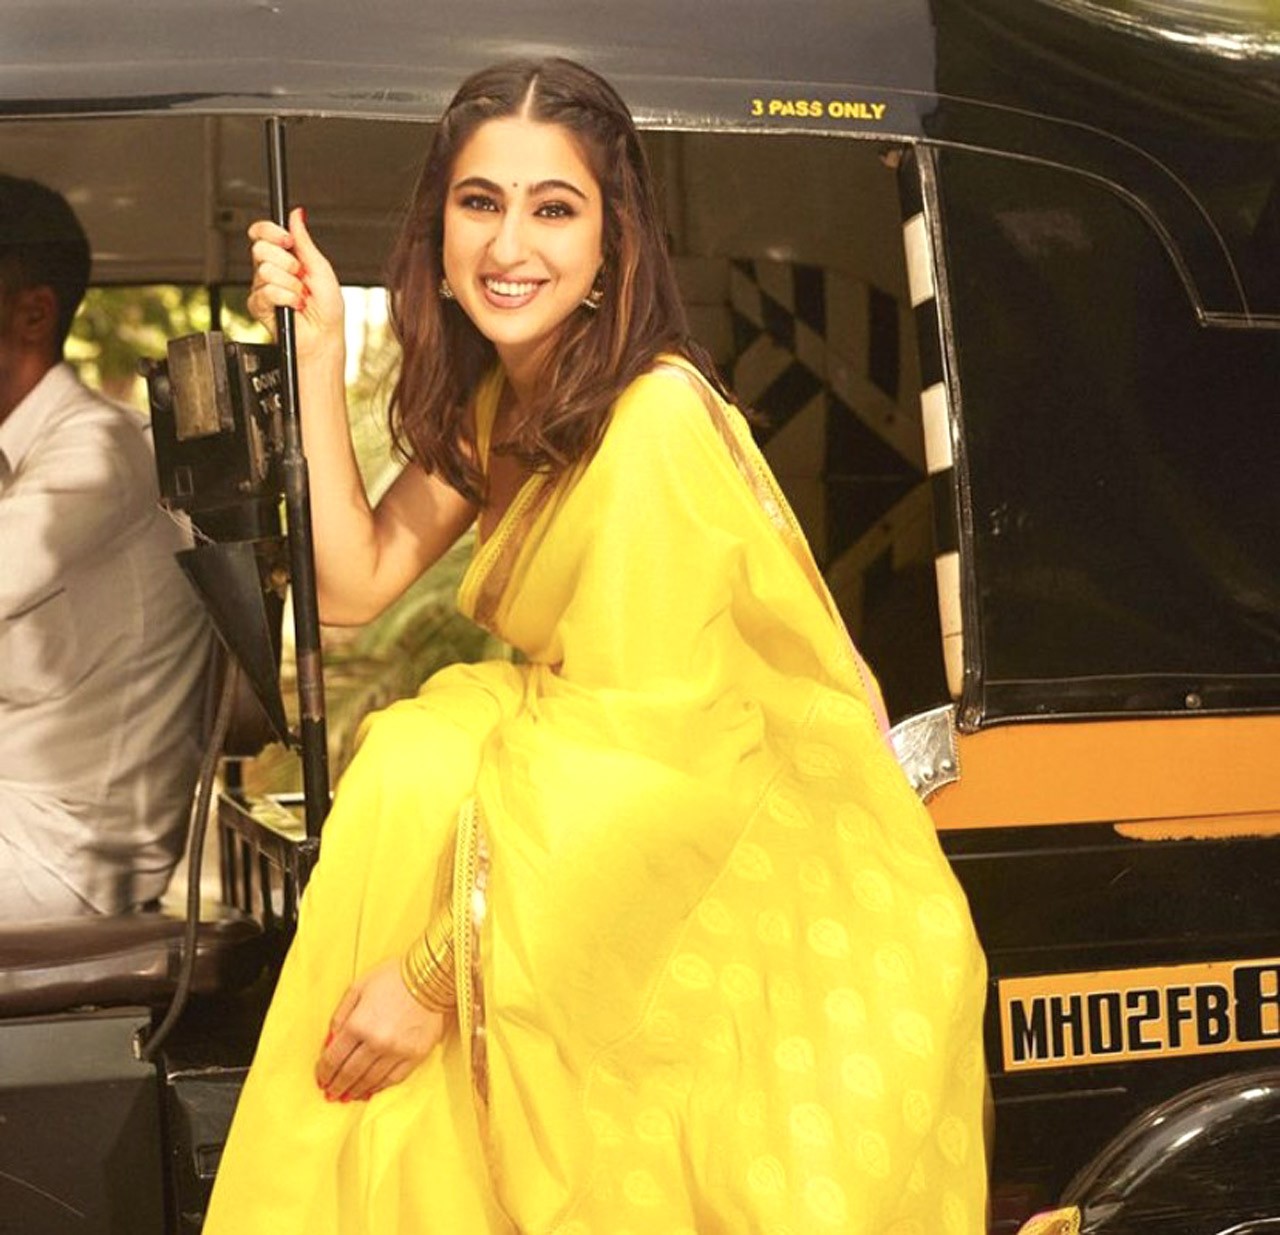 Sara Ali Khan brings the Sun with her in a stunning yellow saree at the trailer launch of Zara Hatke Zara Bachke